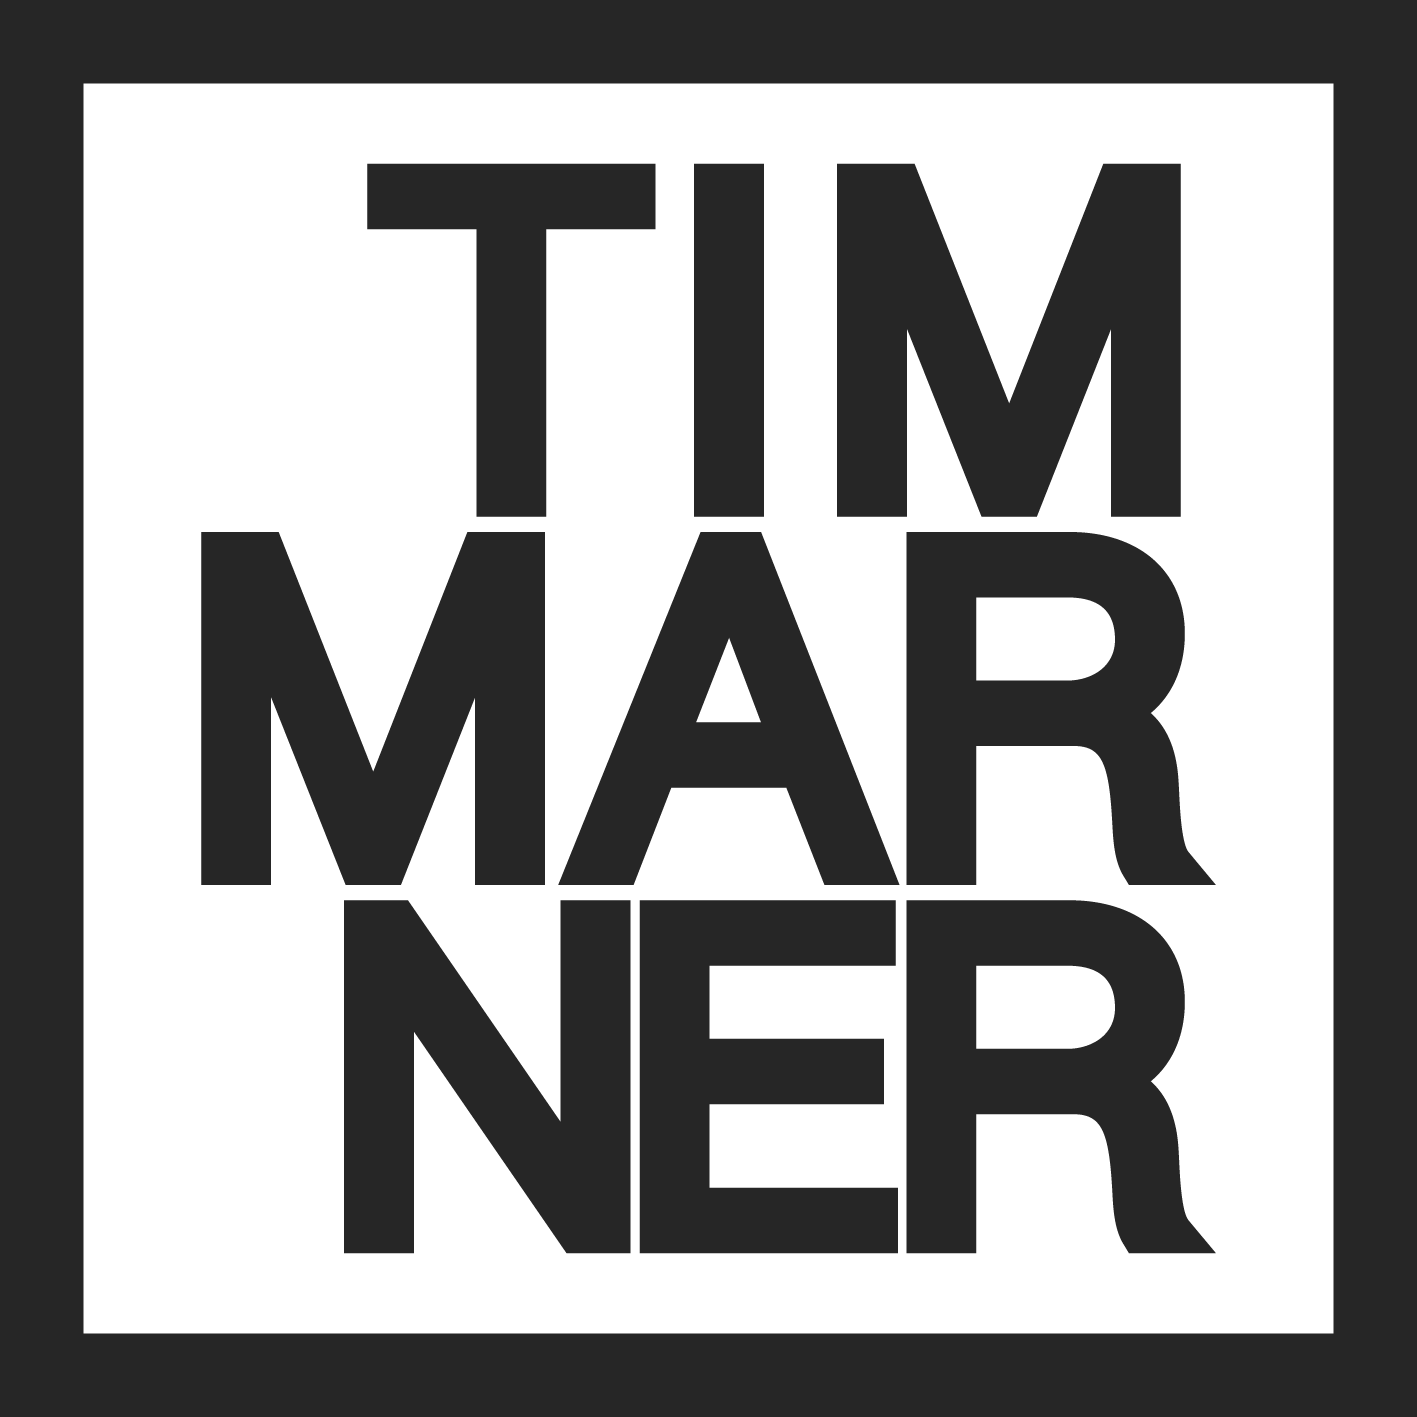 Tim Marner